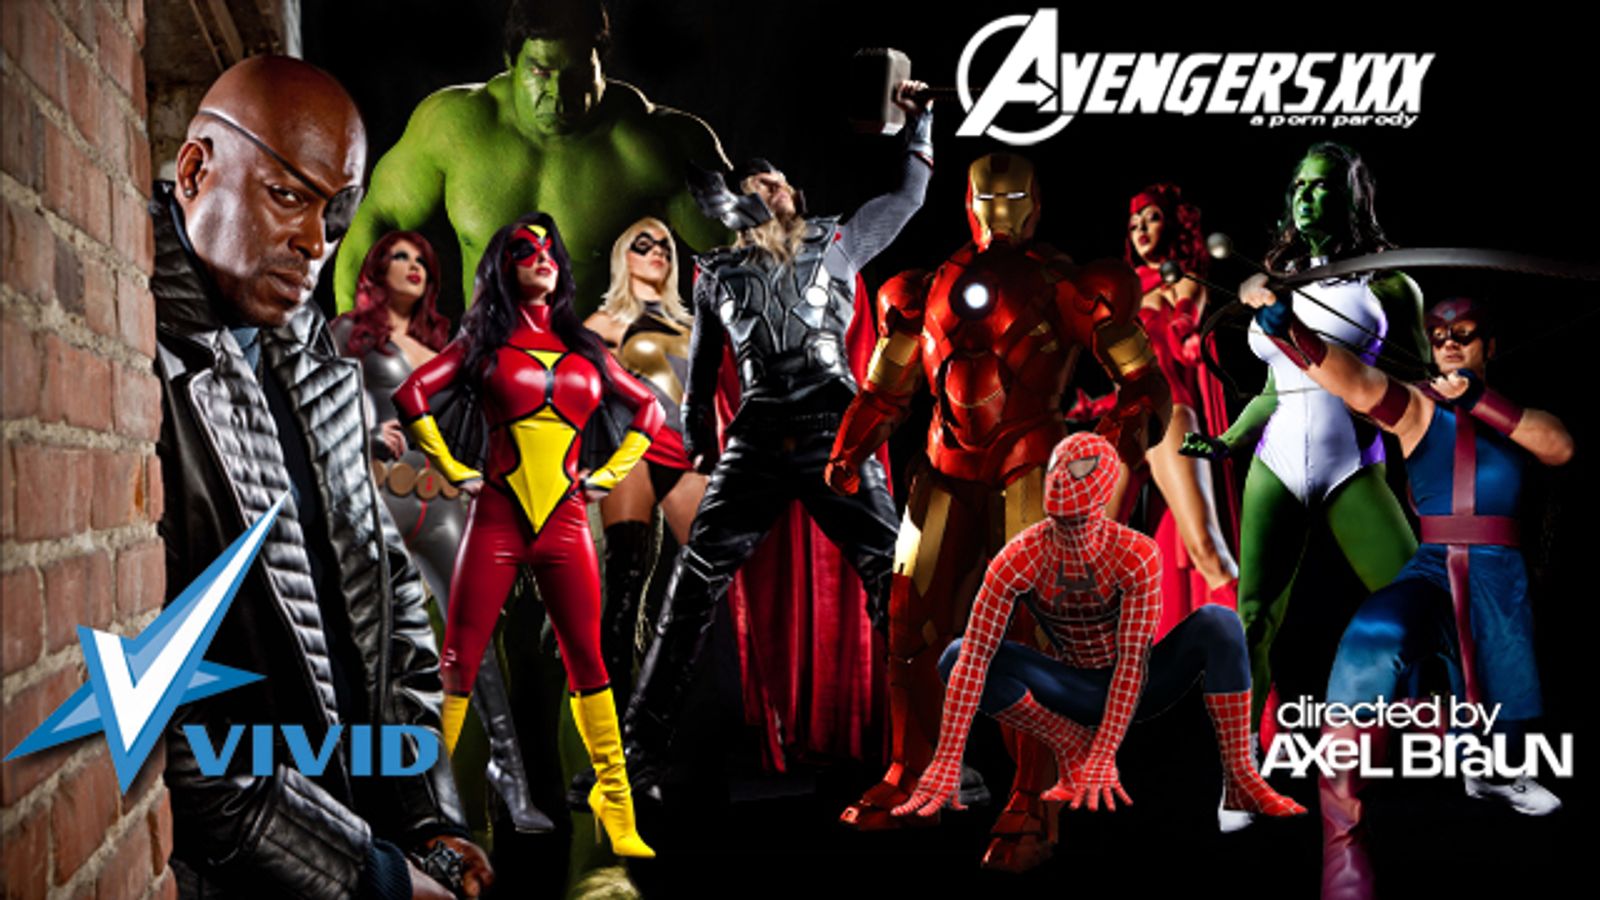 Axel Braun's 'Avengers XXX' On the Way From Vivid